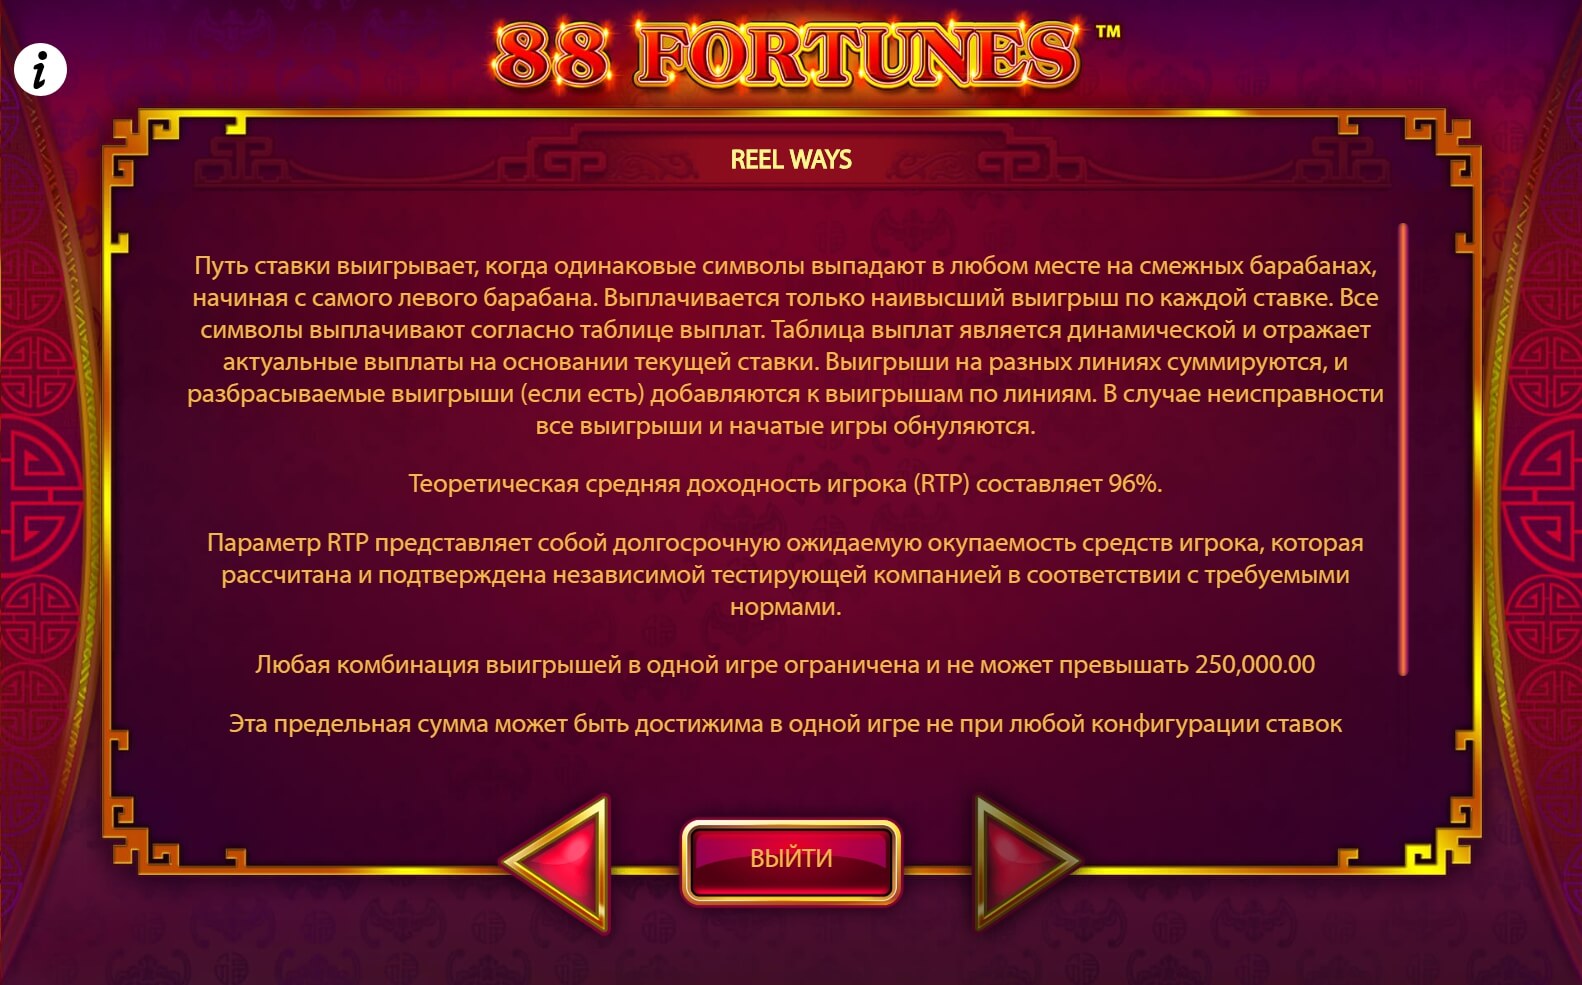 88 fortunes slot machine detail image 0